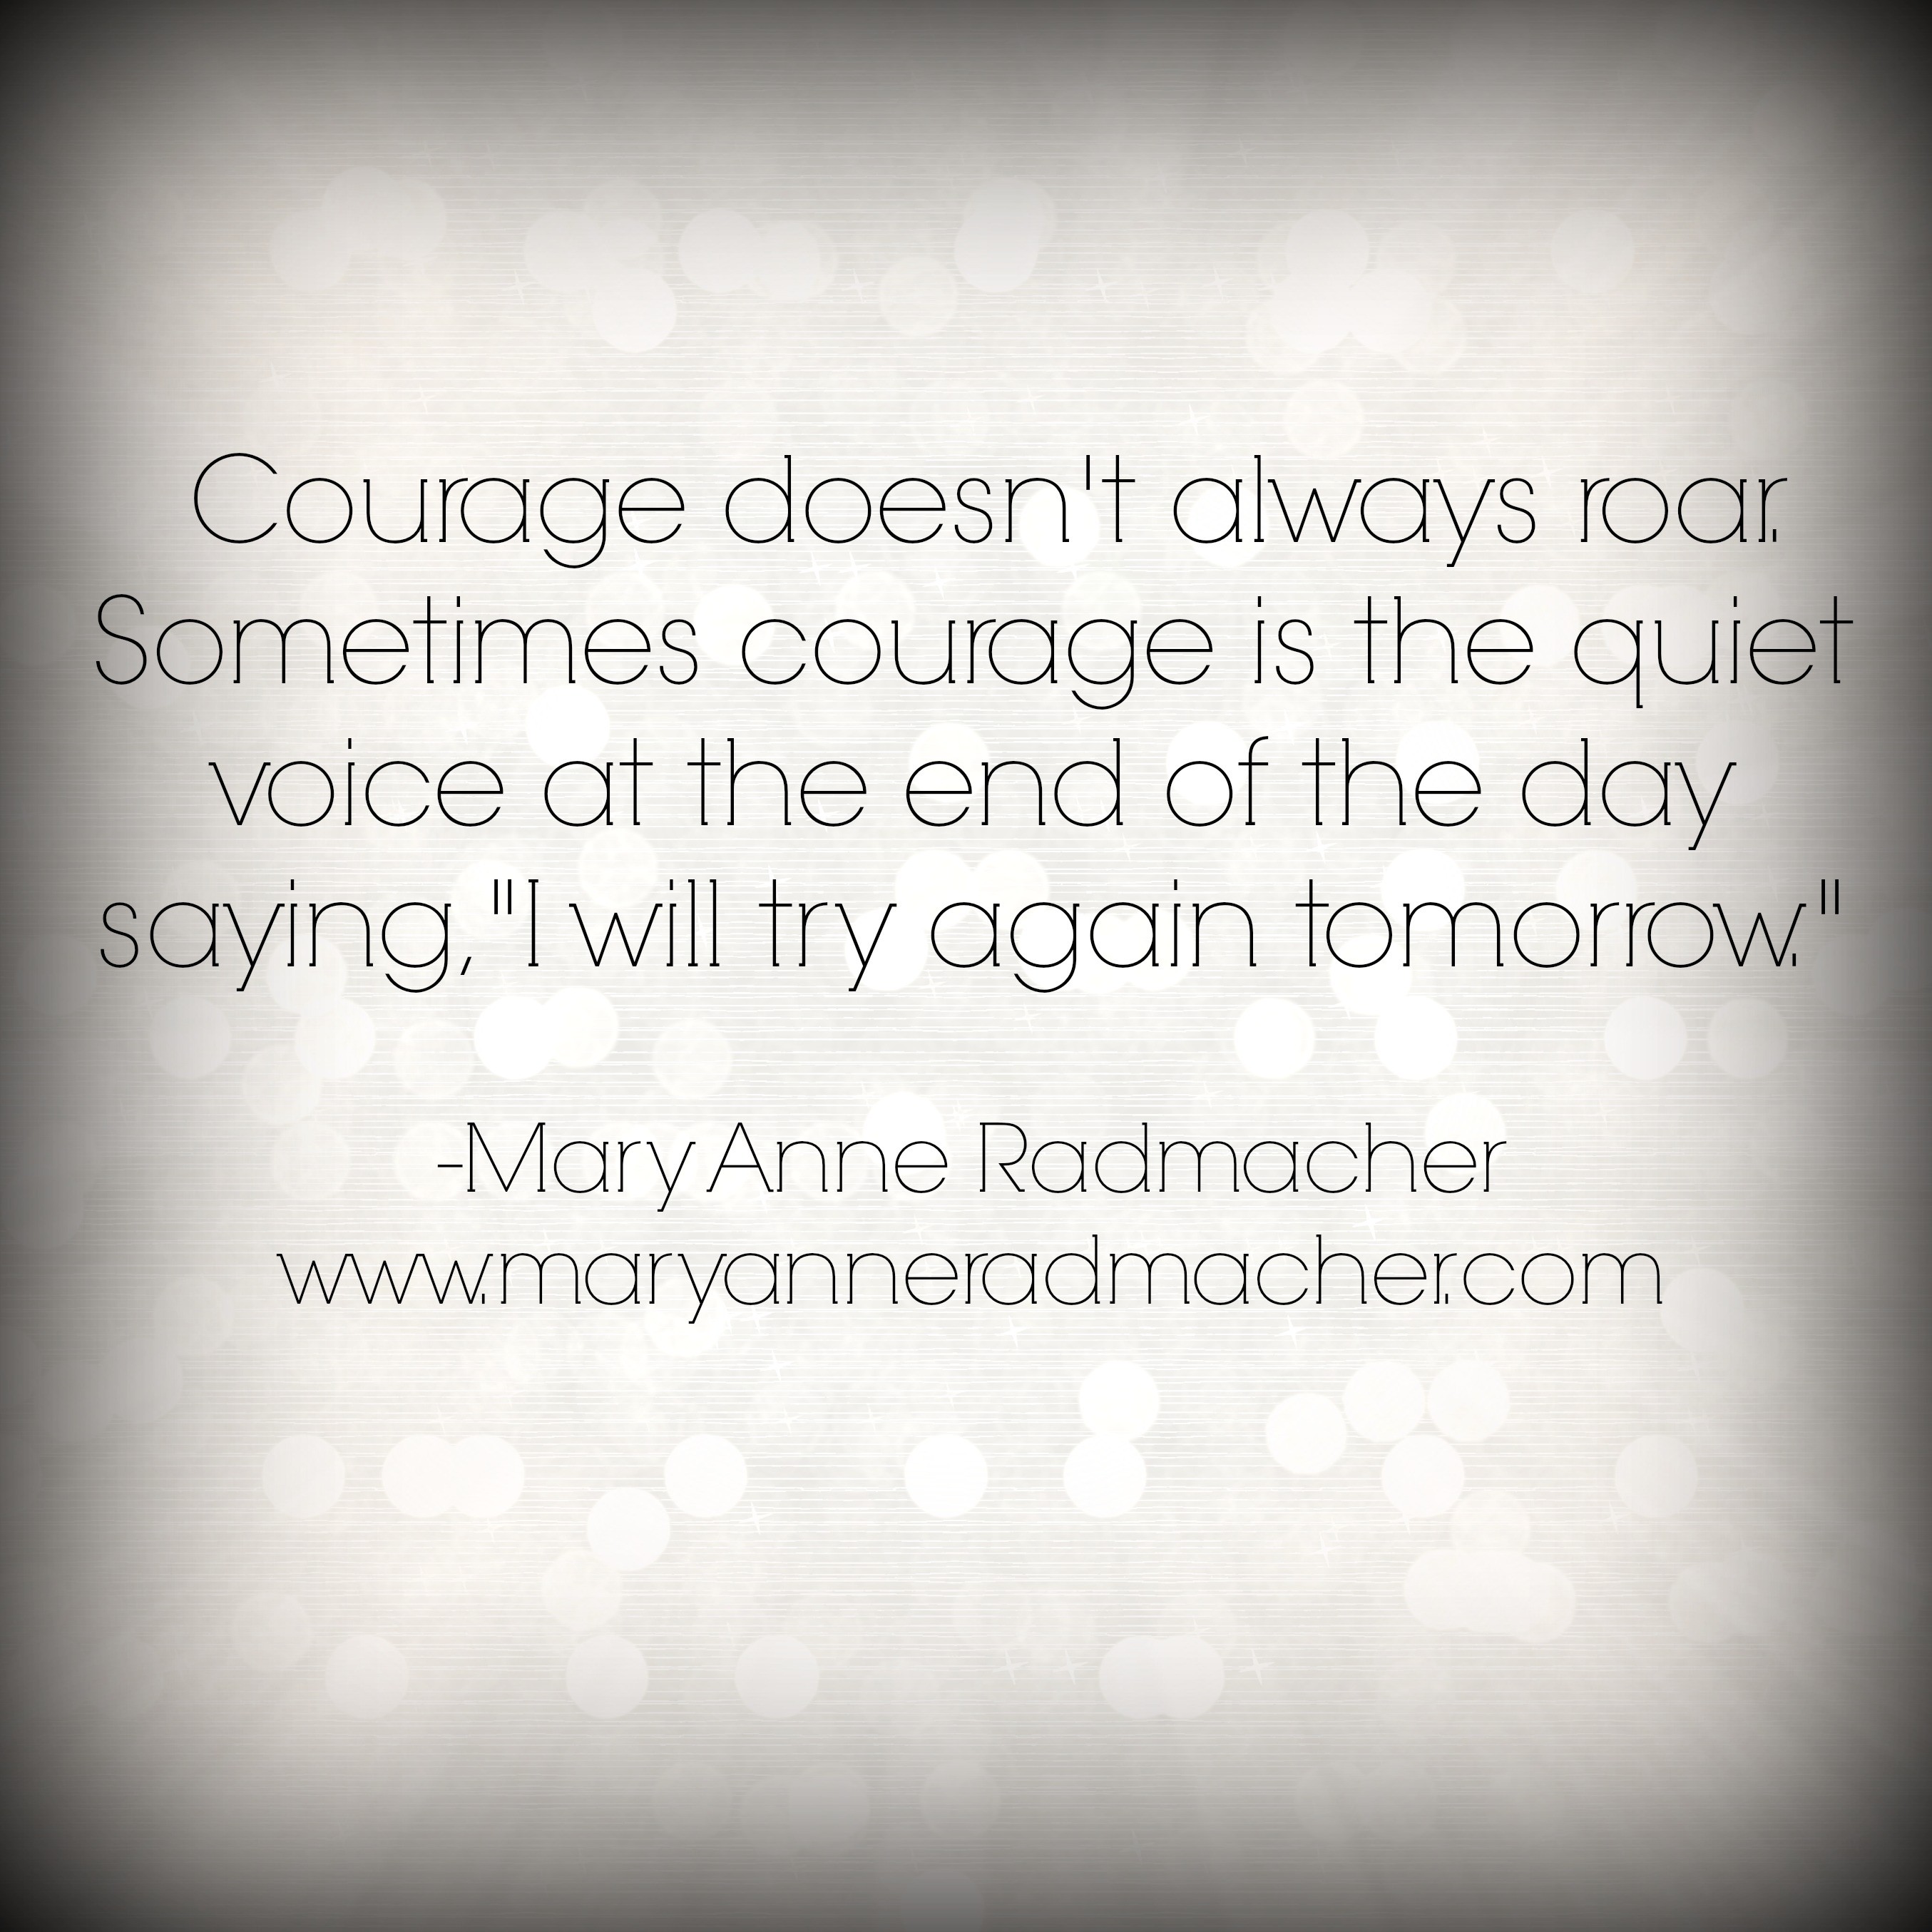 courage-doesnt-always-roar